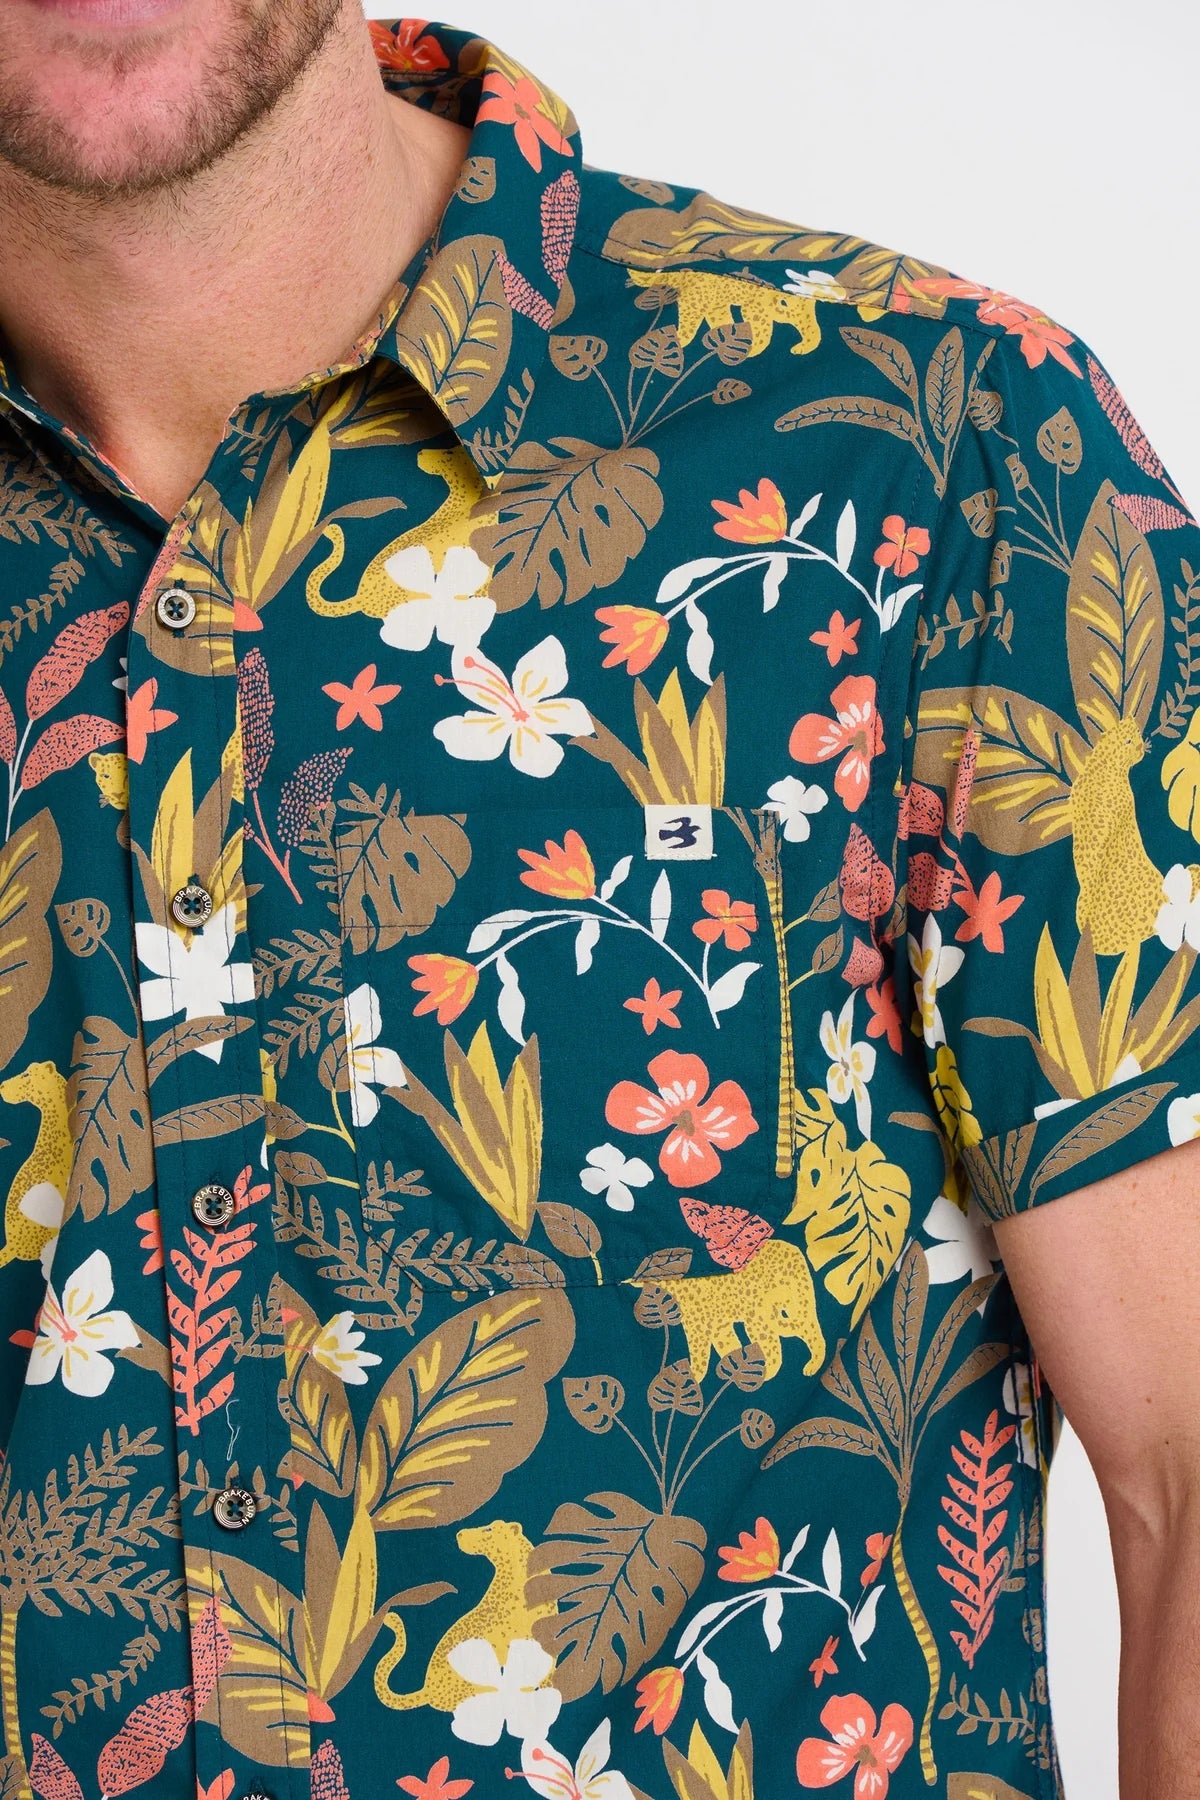 A men's botanical jungle style floral print short sleeve shirt from Brakeburn